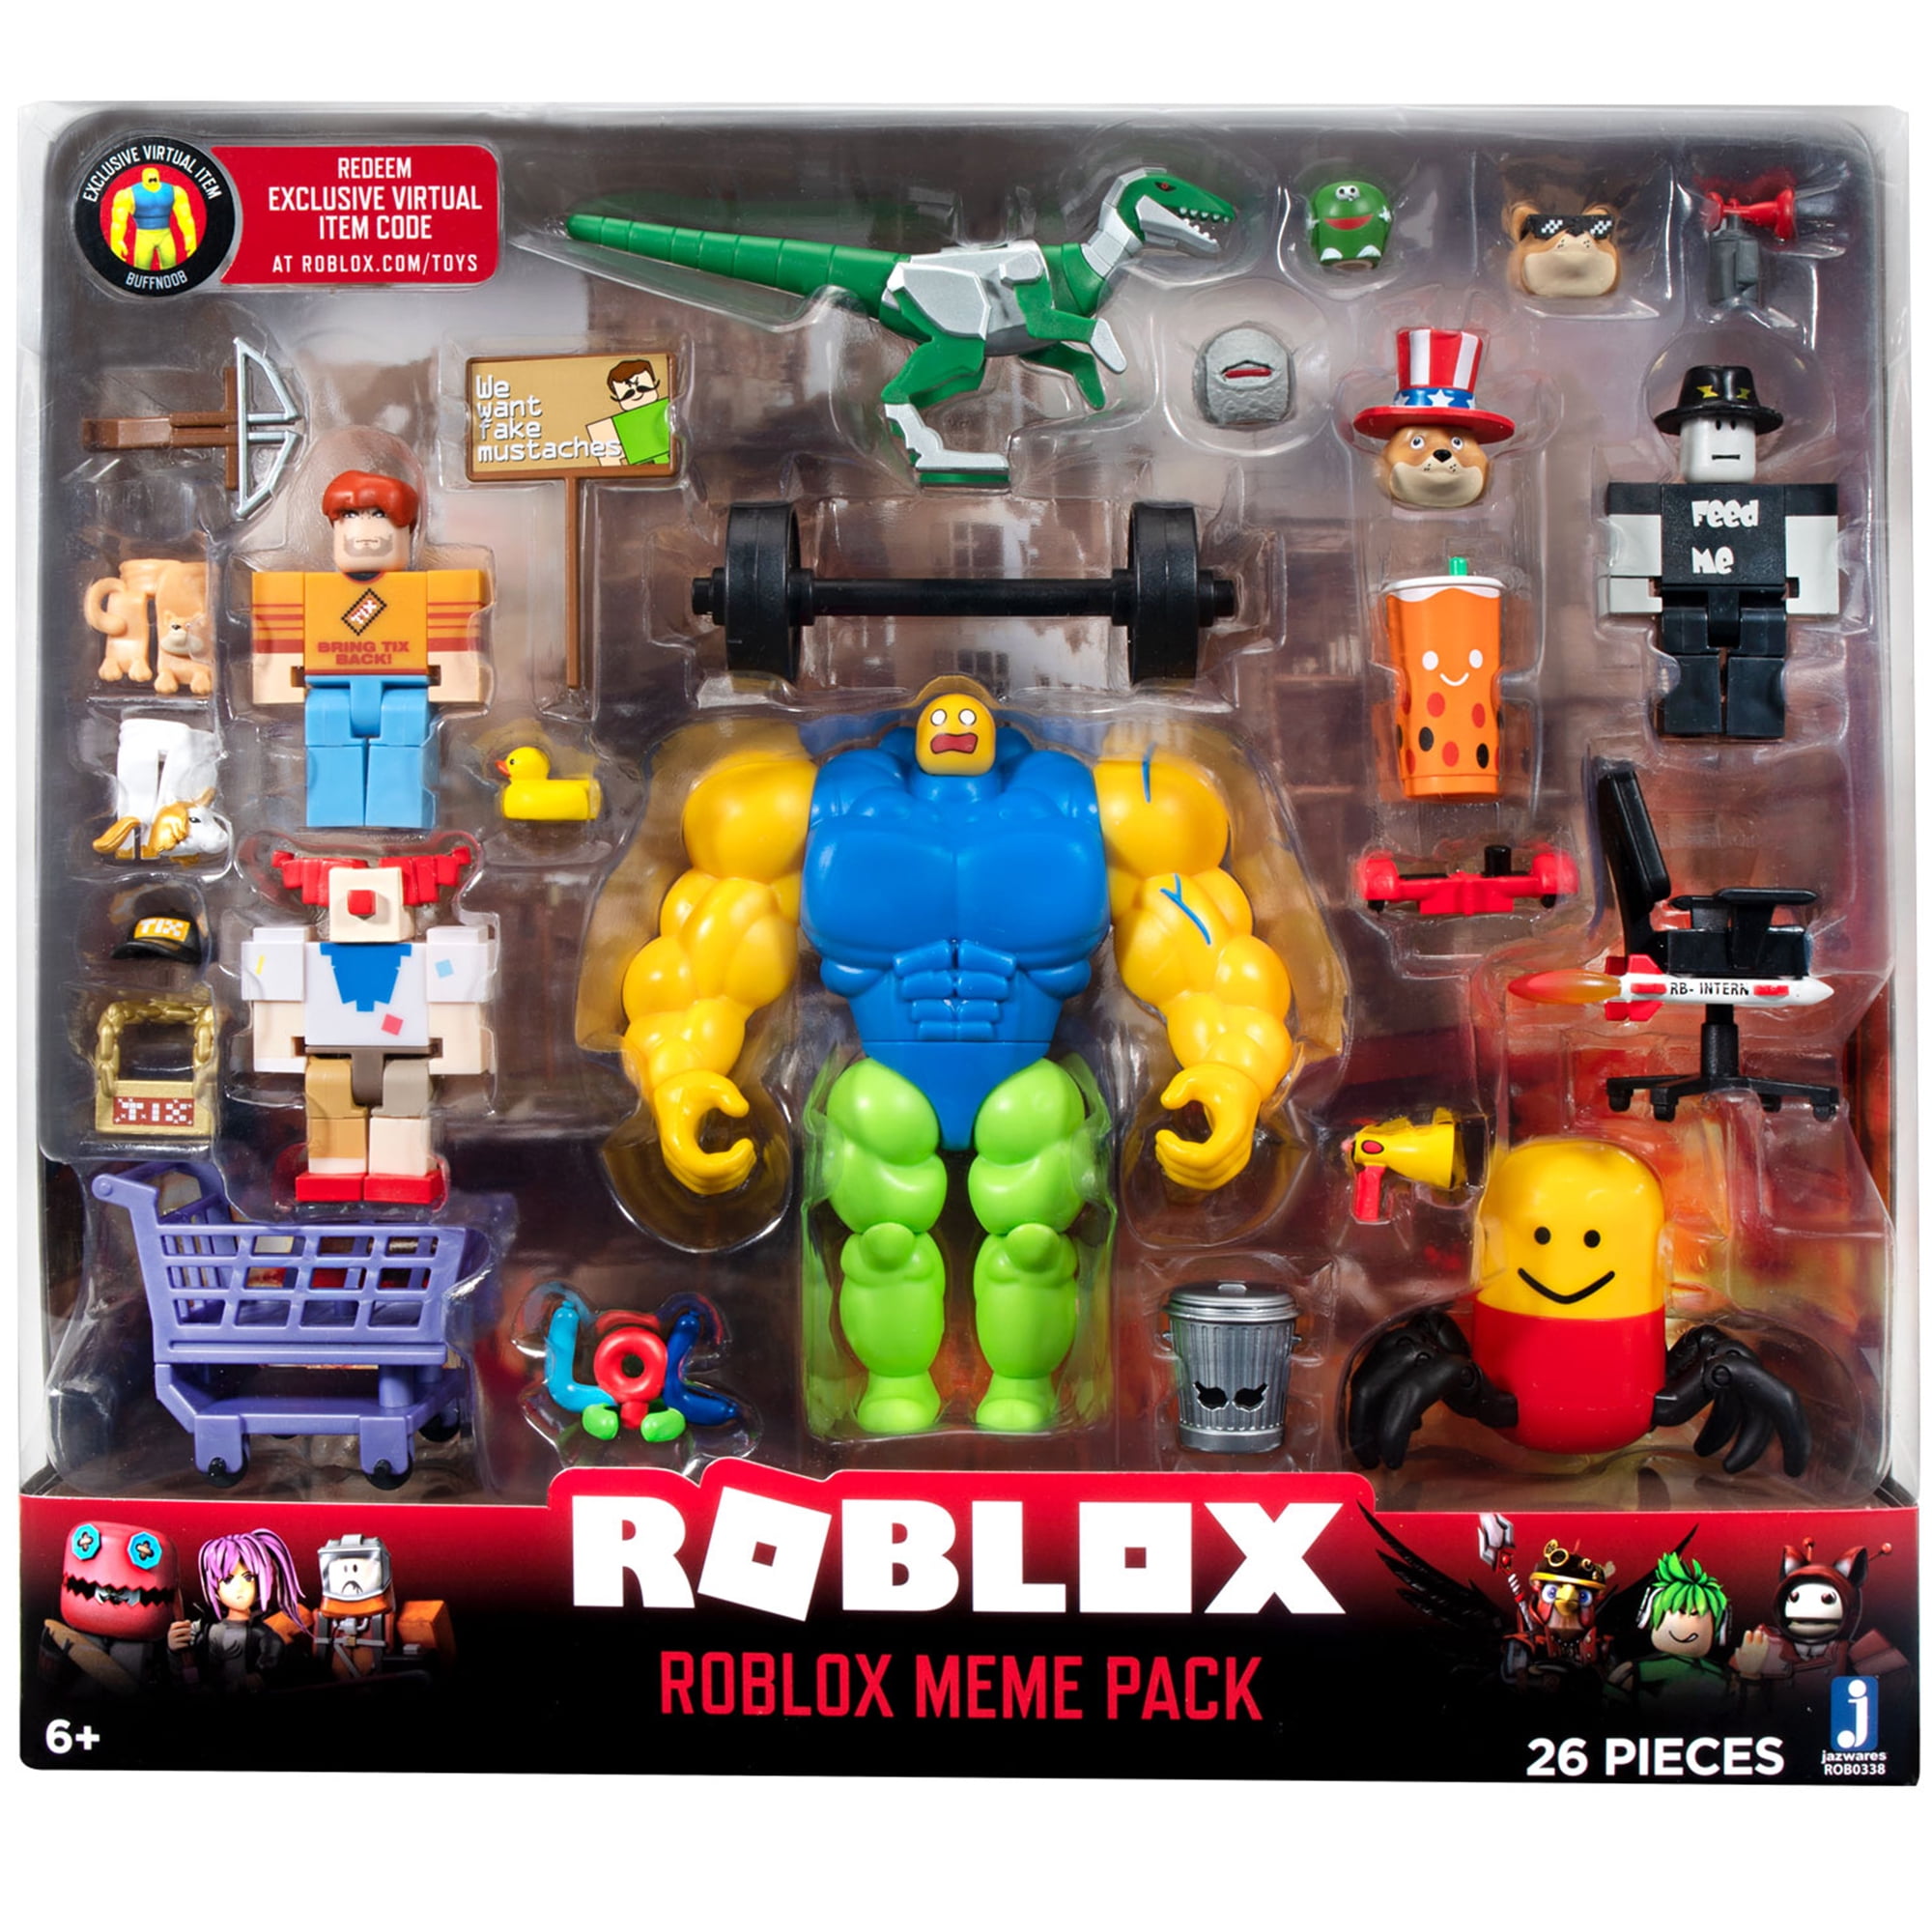 Roblox Action Collection Meme Pack Playset Includes Exclusive Virtual Item Walmart Com Walmart Com - tix fan roblox toy